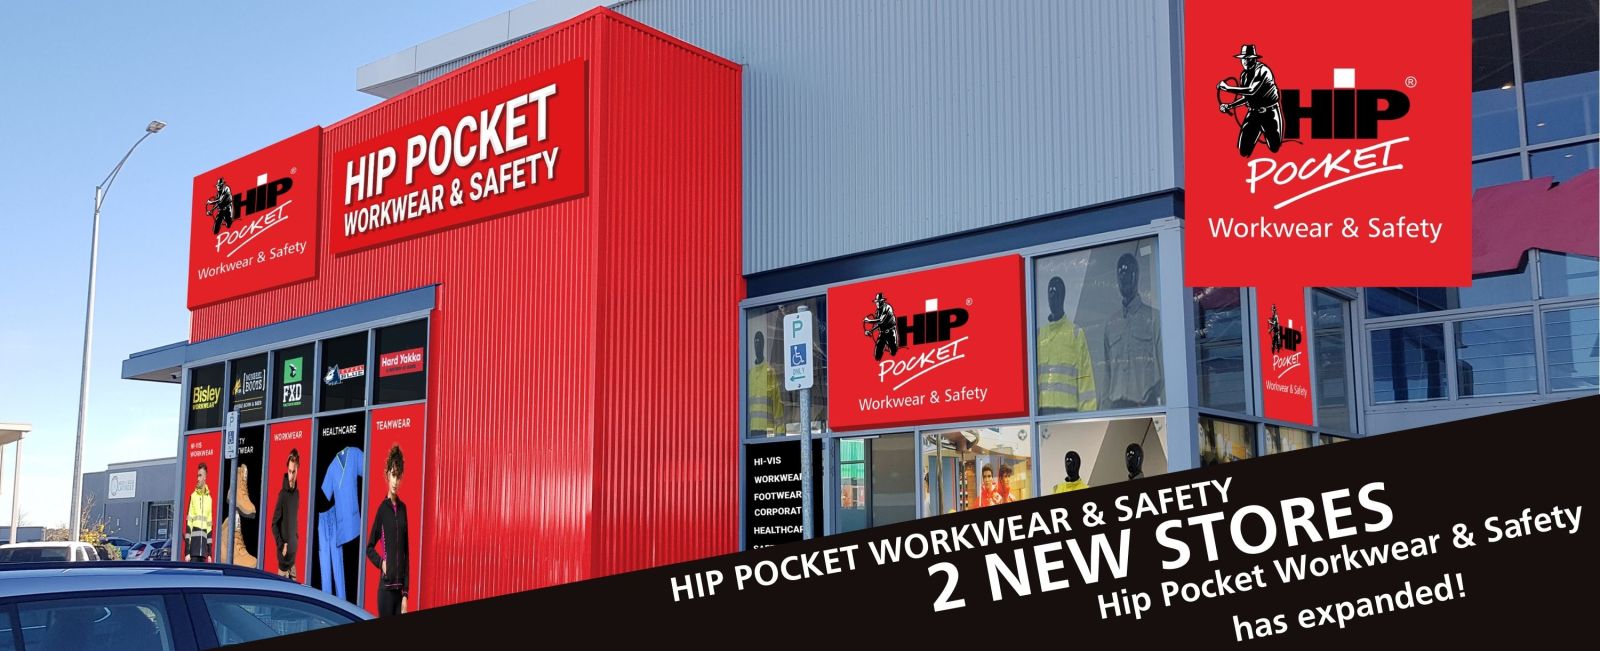 hip pocket 2 new stores banner